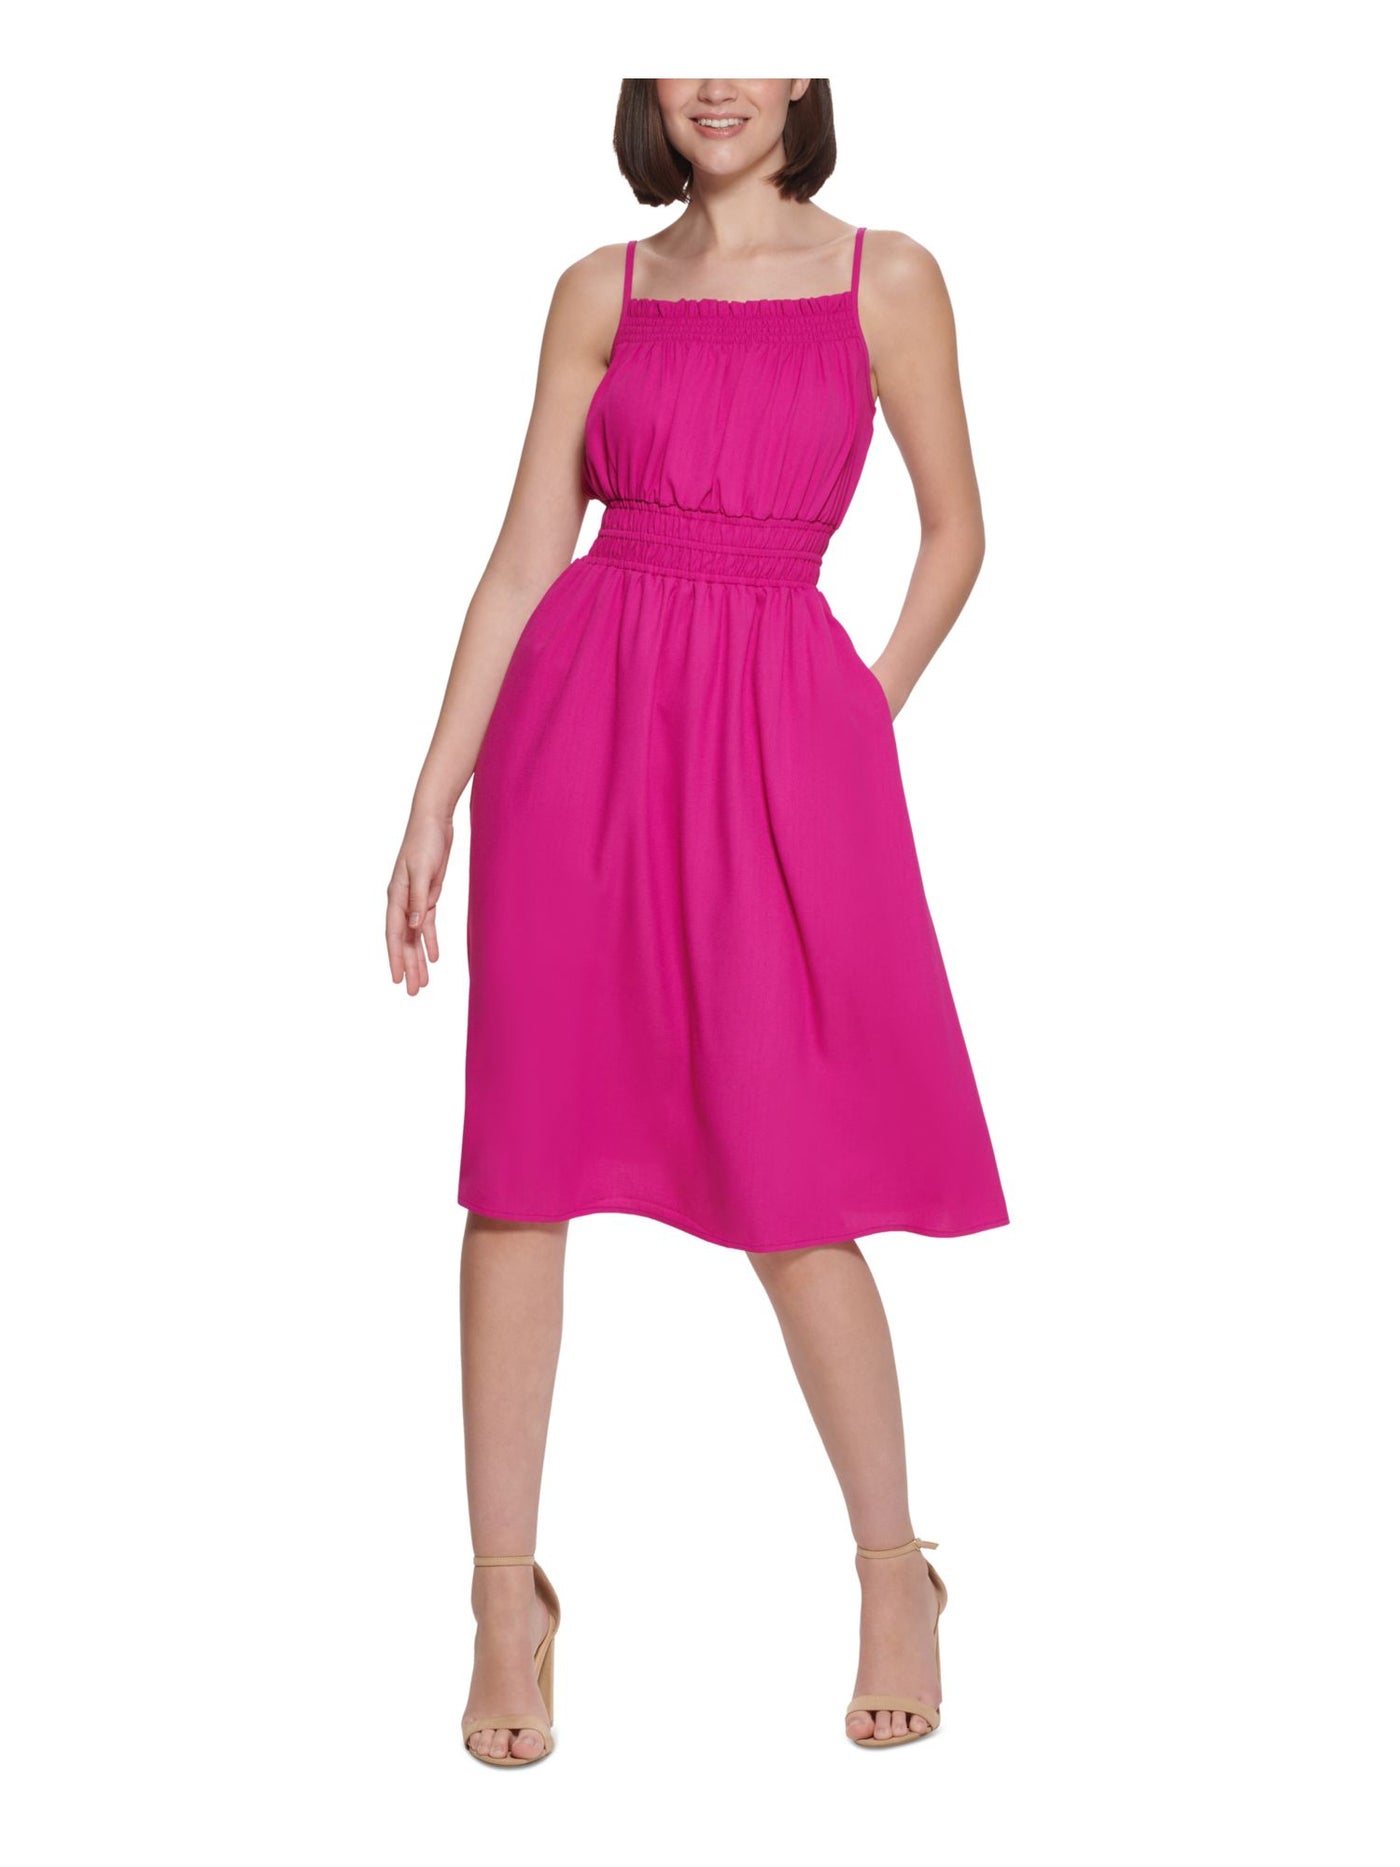 KENSIE DRESSES Womens Pink Smocked Spaghetti Strap Square Neck Knee Length A-Line Dress 6